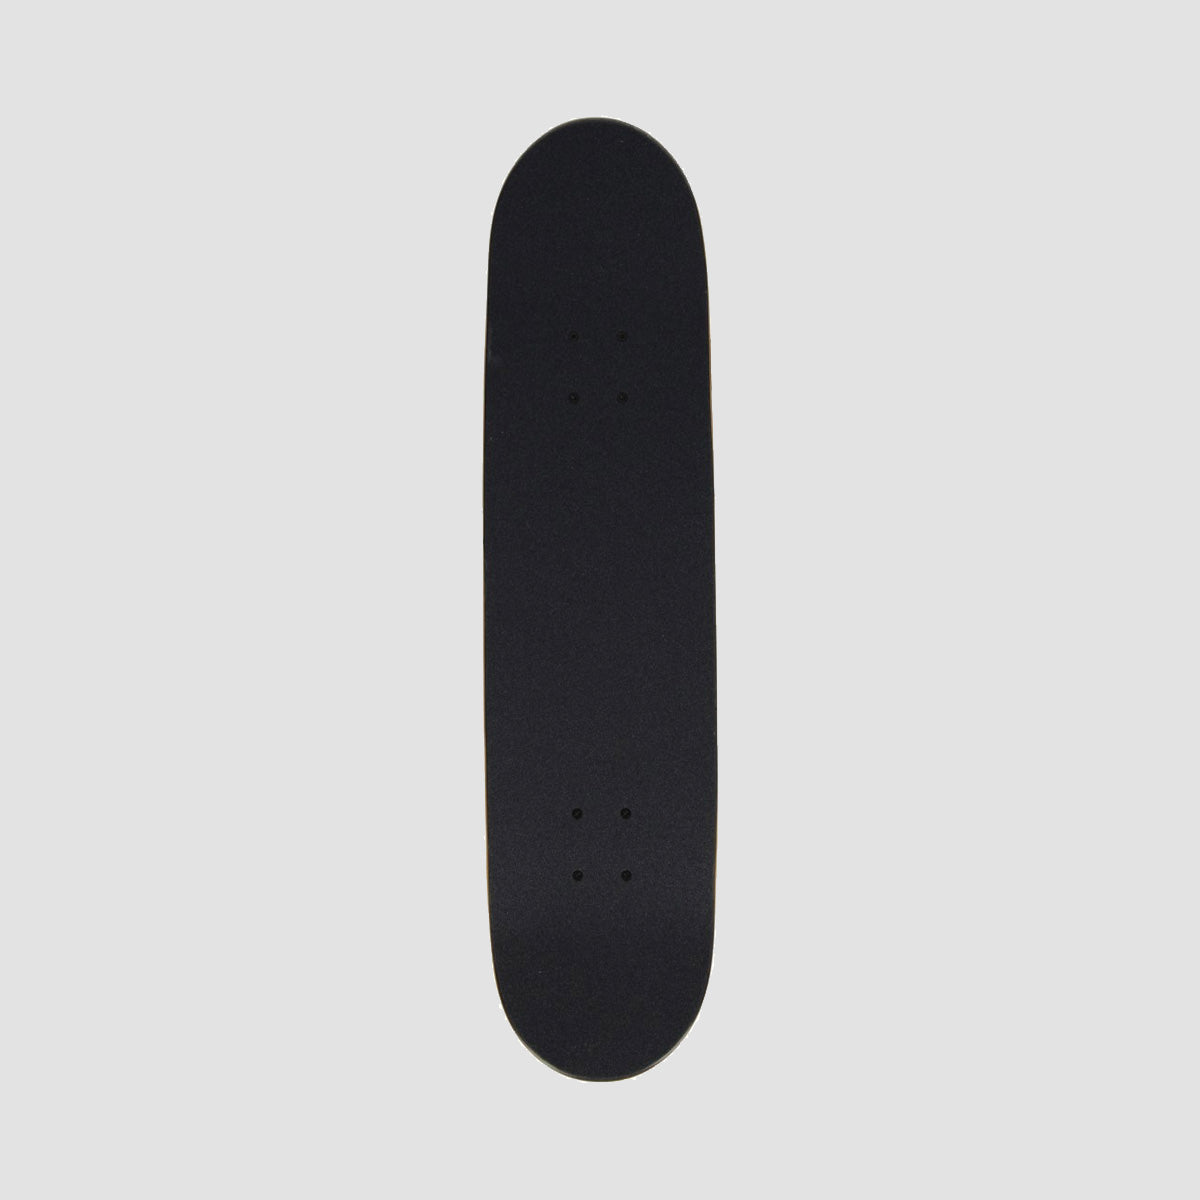 Almost Blur Resin Skateboard Multi - 7.75"